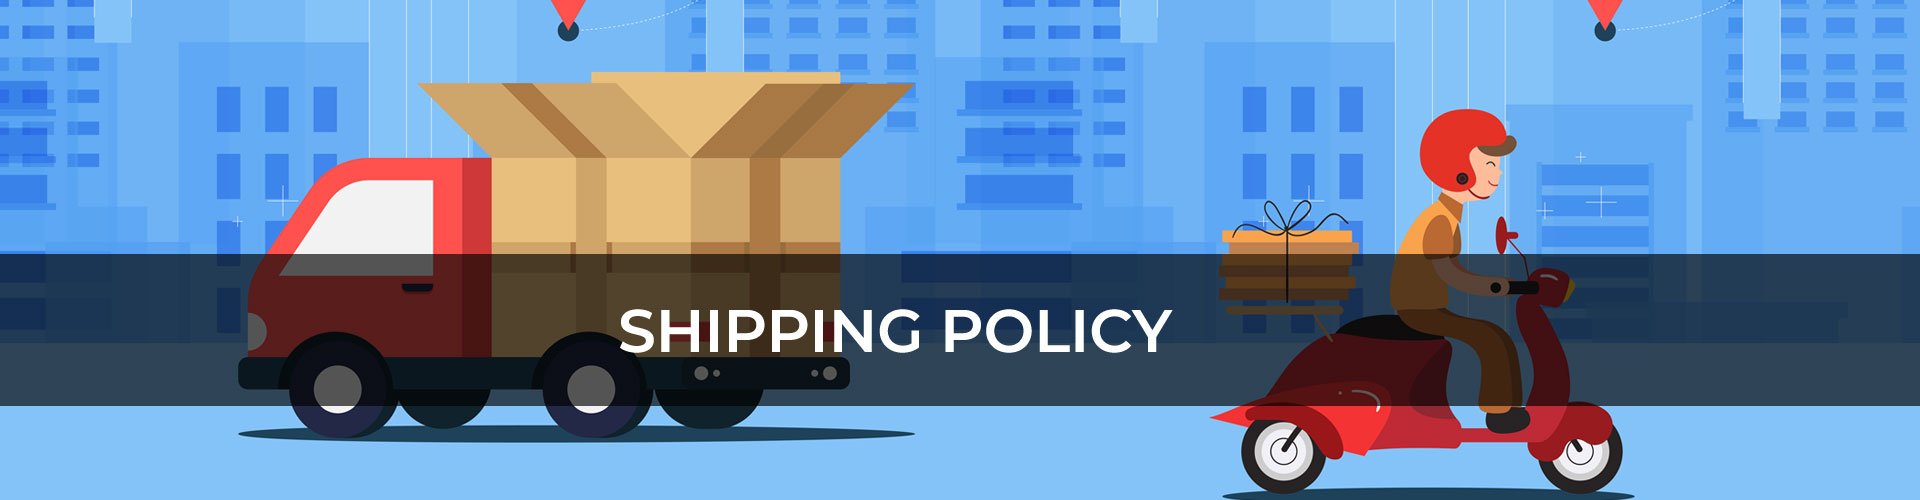 https://cdn.shopify.com/s/files/1/0281/4708/9486/files/banner-shipping-policy.jpg?v=1575457912